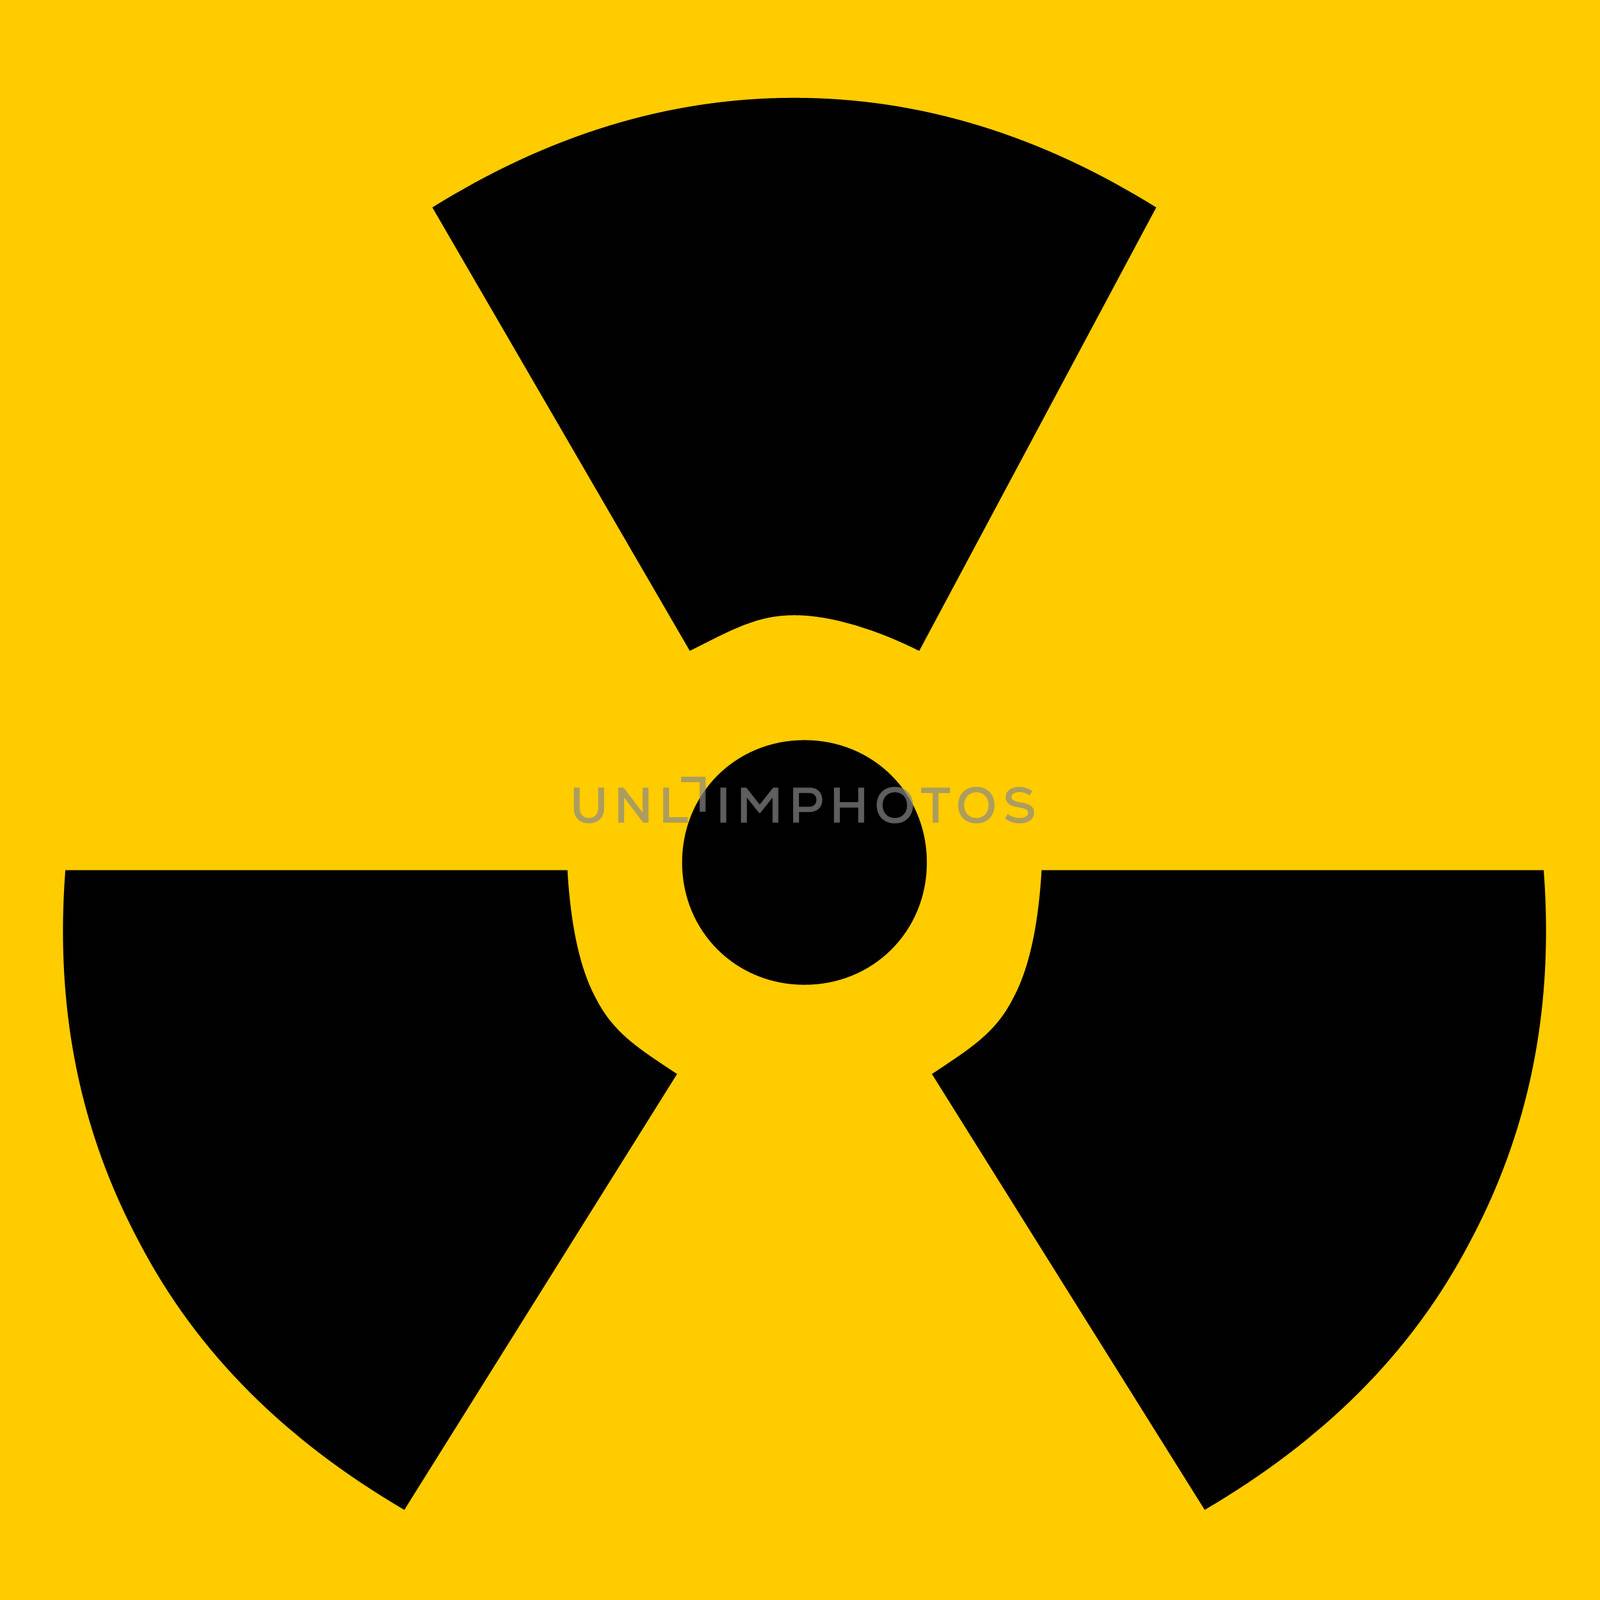 Radioactive sign by Georgios